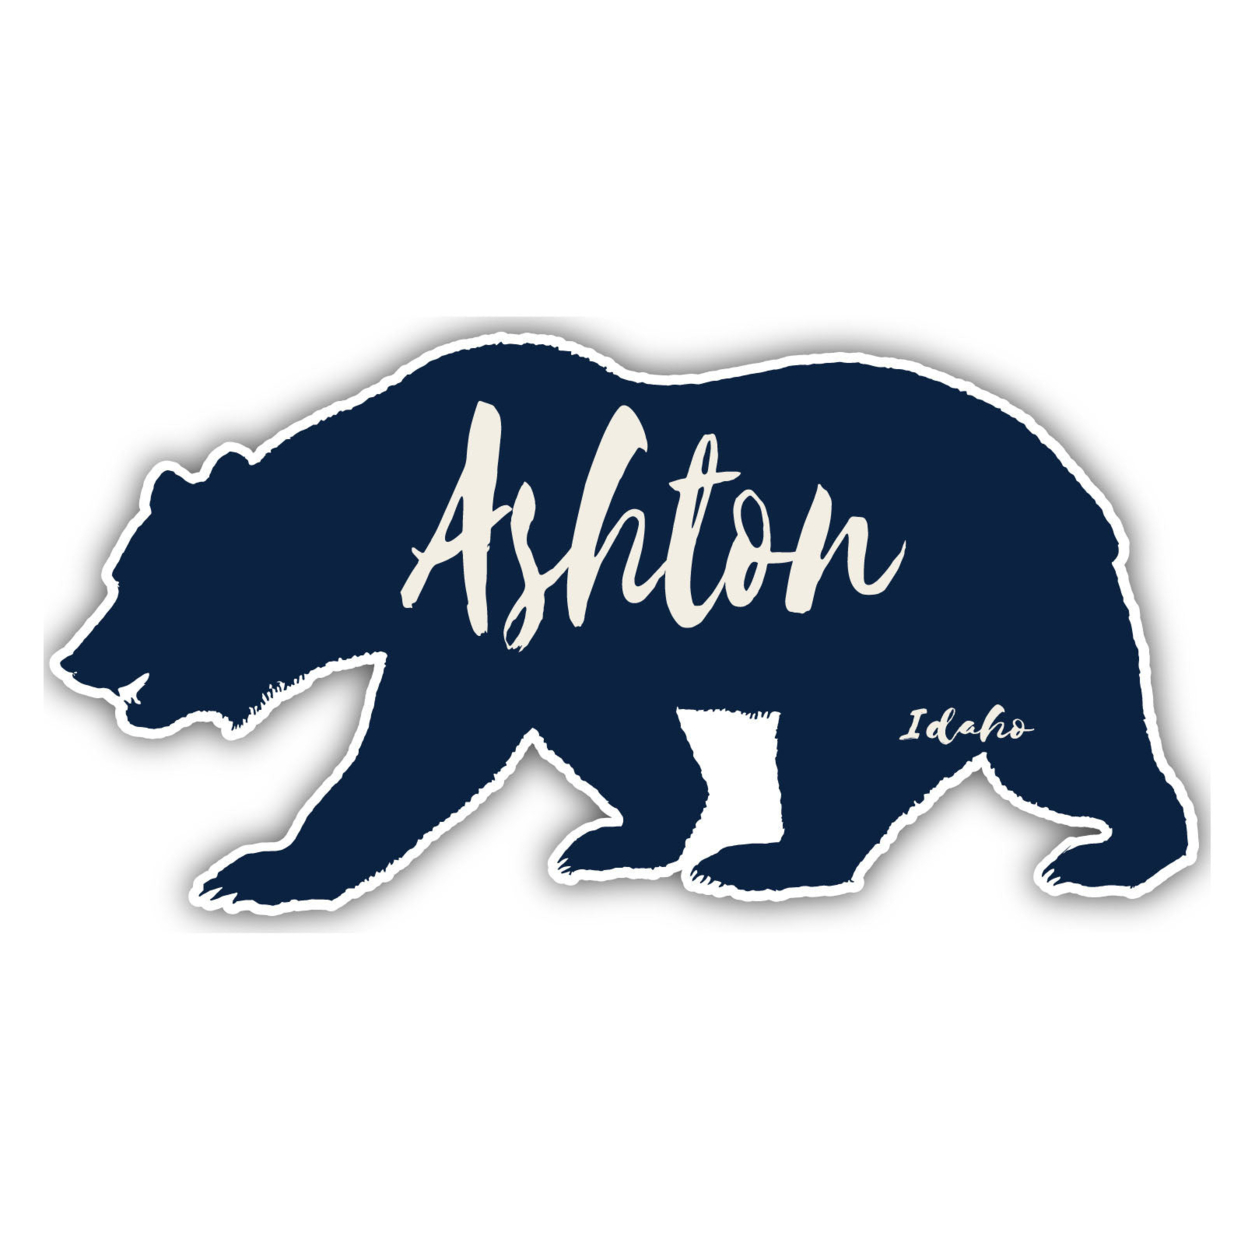 Ashton Idaho Souvenir Decorative Stickers (Choose Theme And Size) - 4-Pack, 12-Inch, Tent